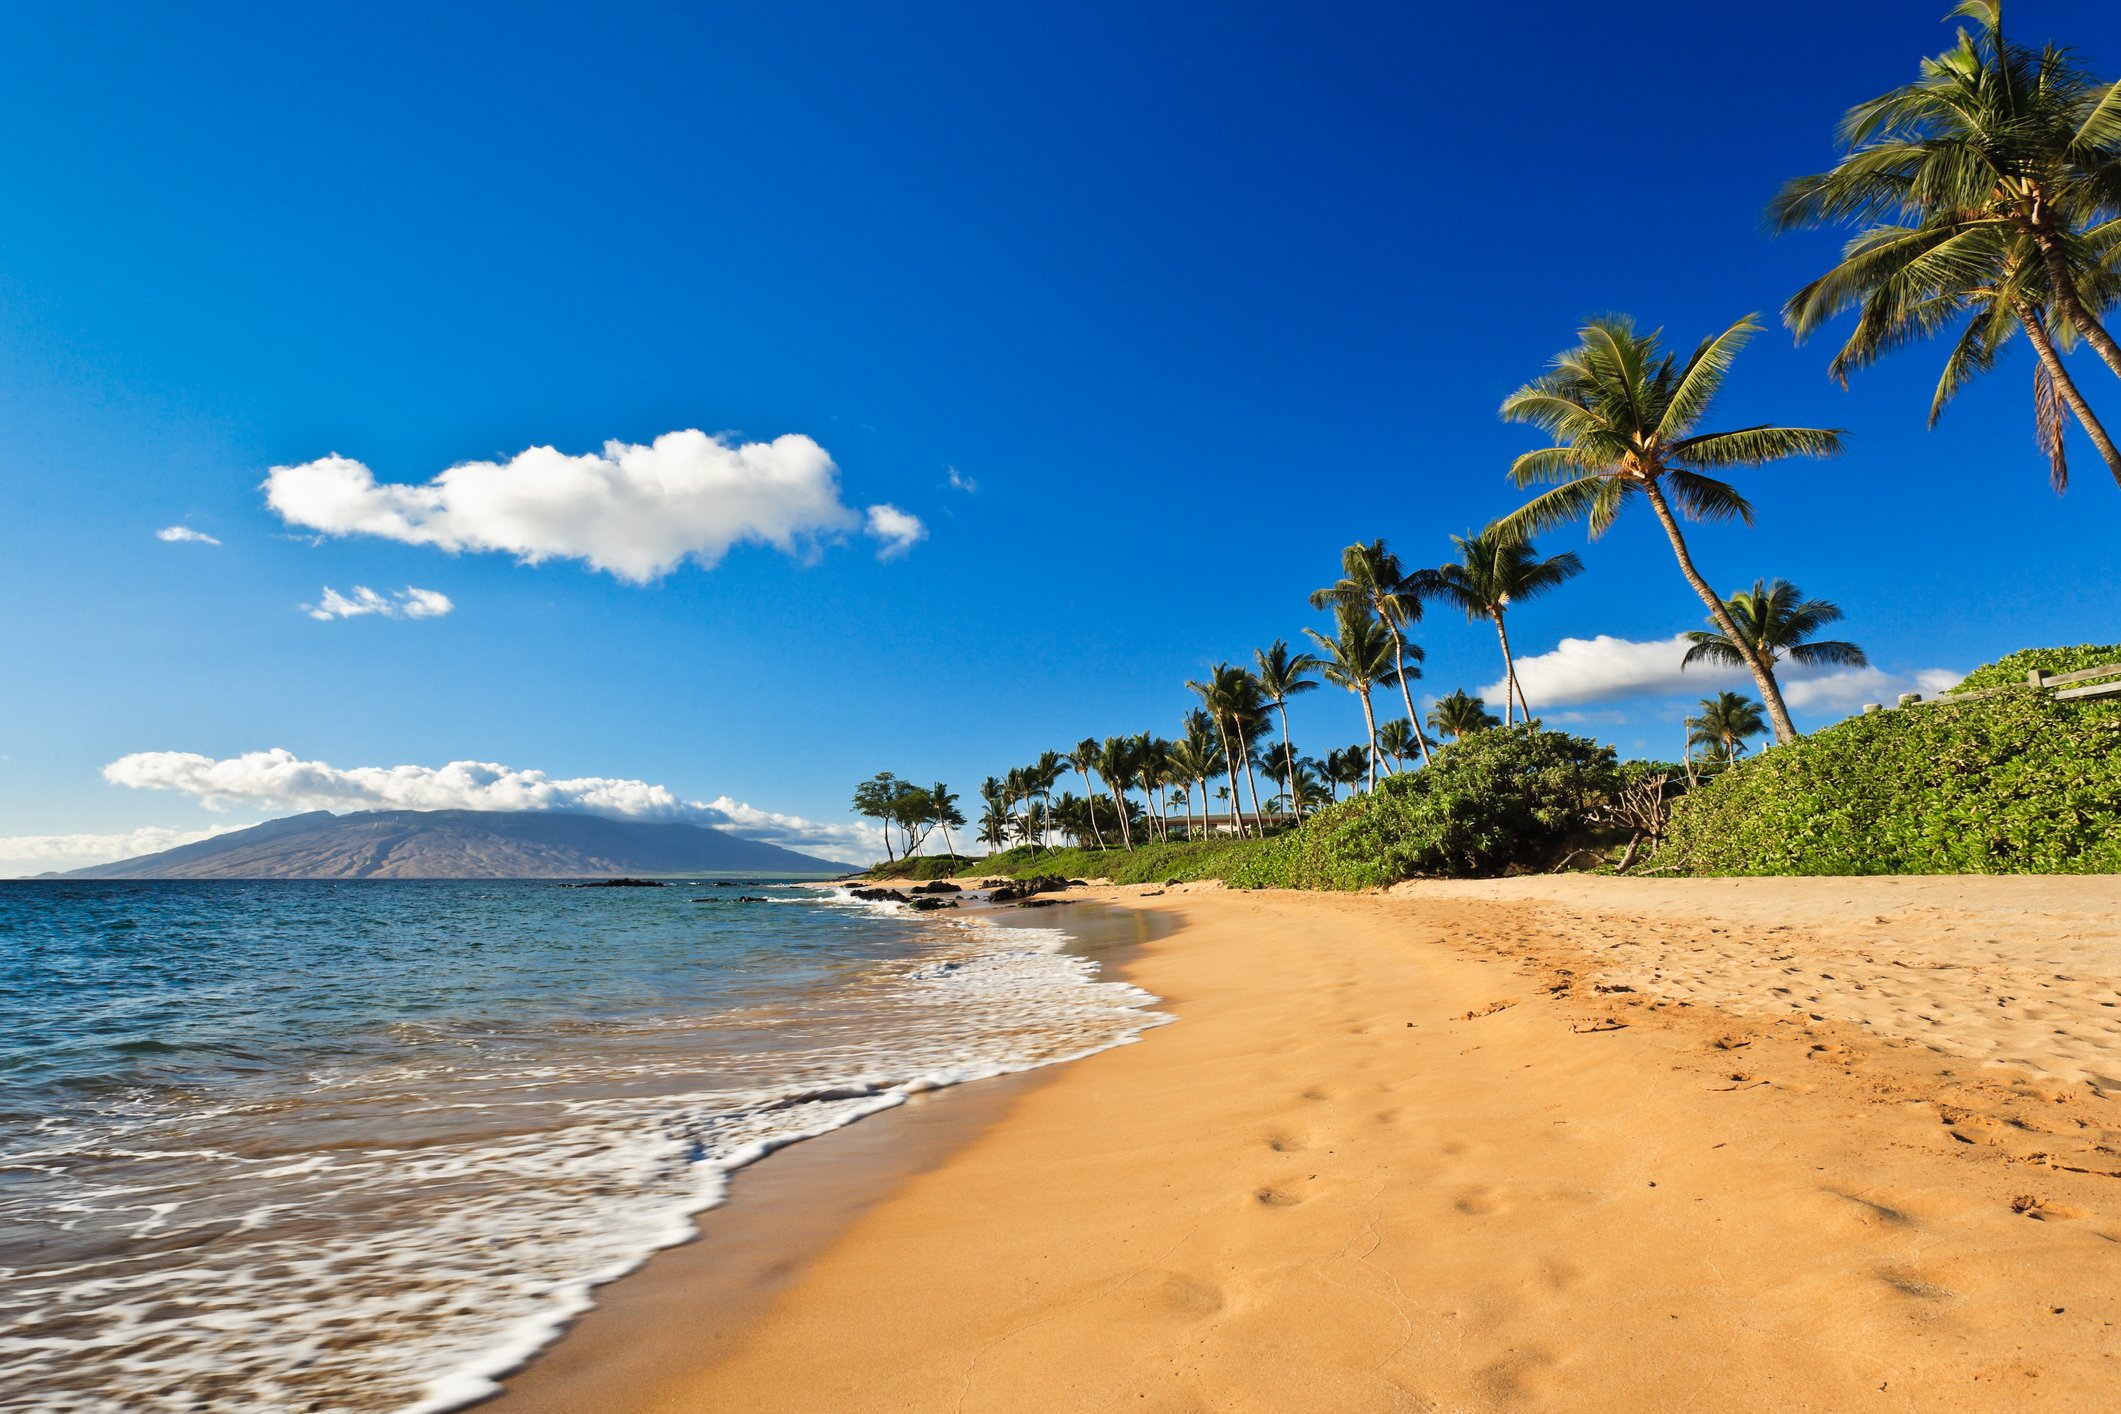 Hawaii: Maui [DVD]